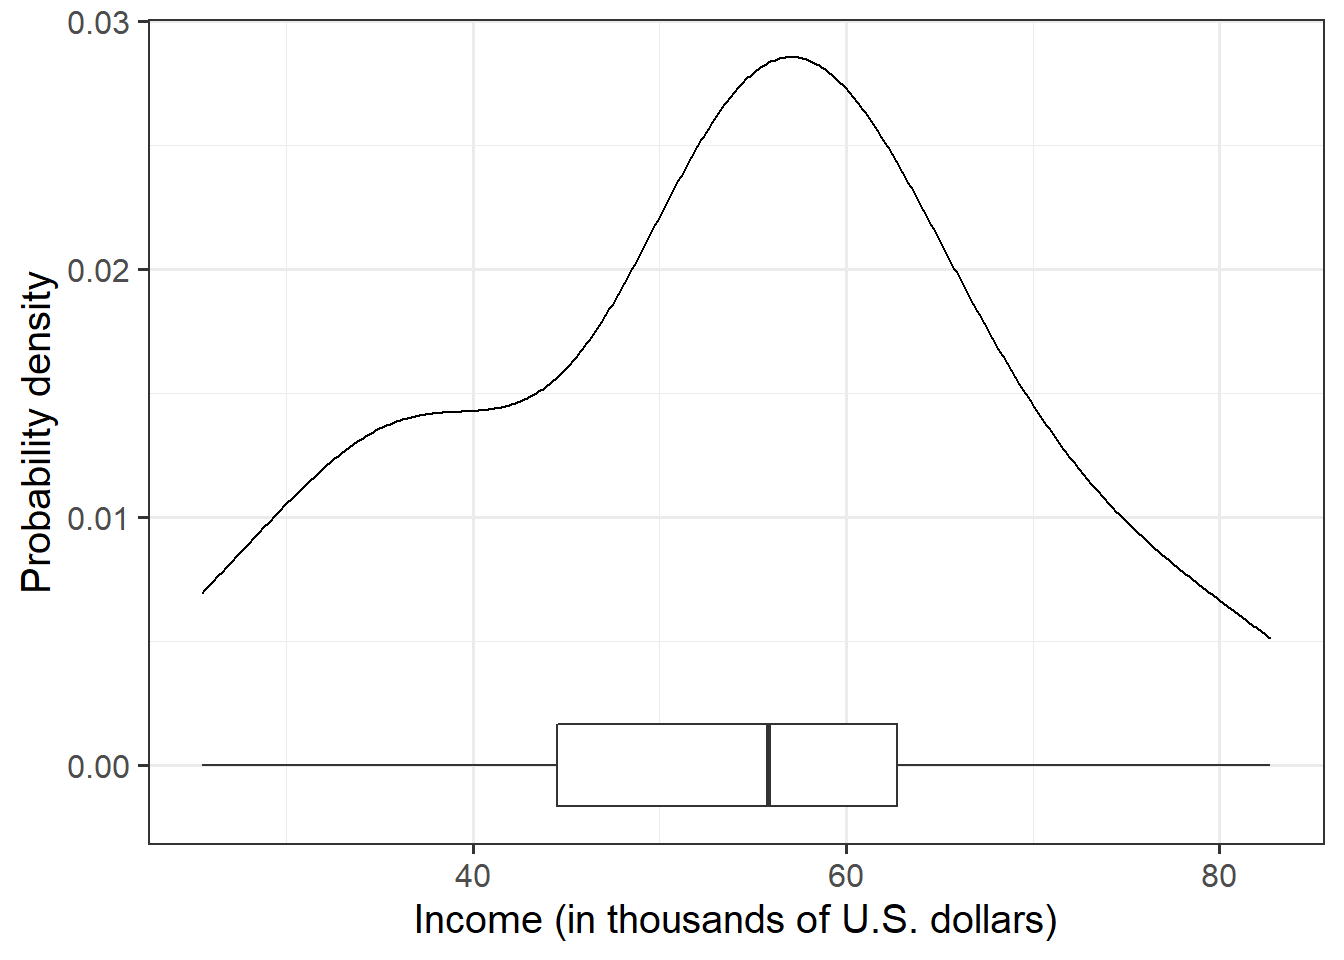 Density plot and boxplot of employee incomes.